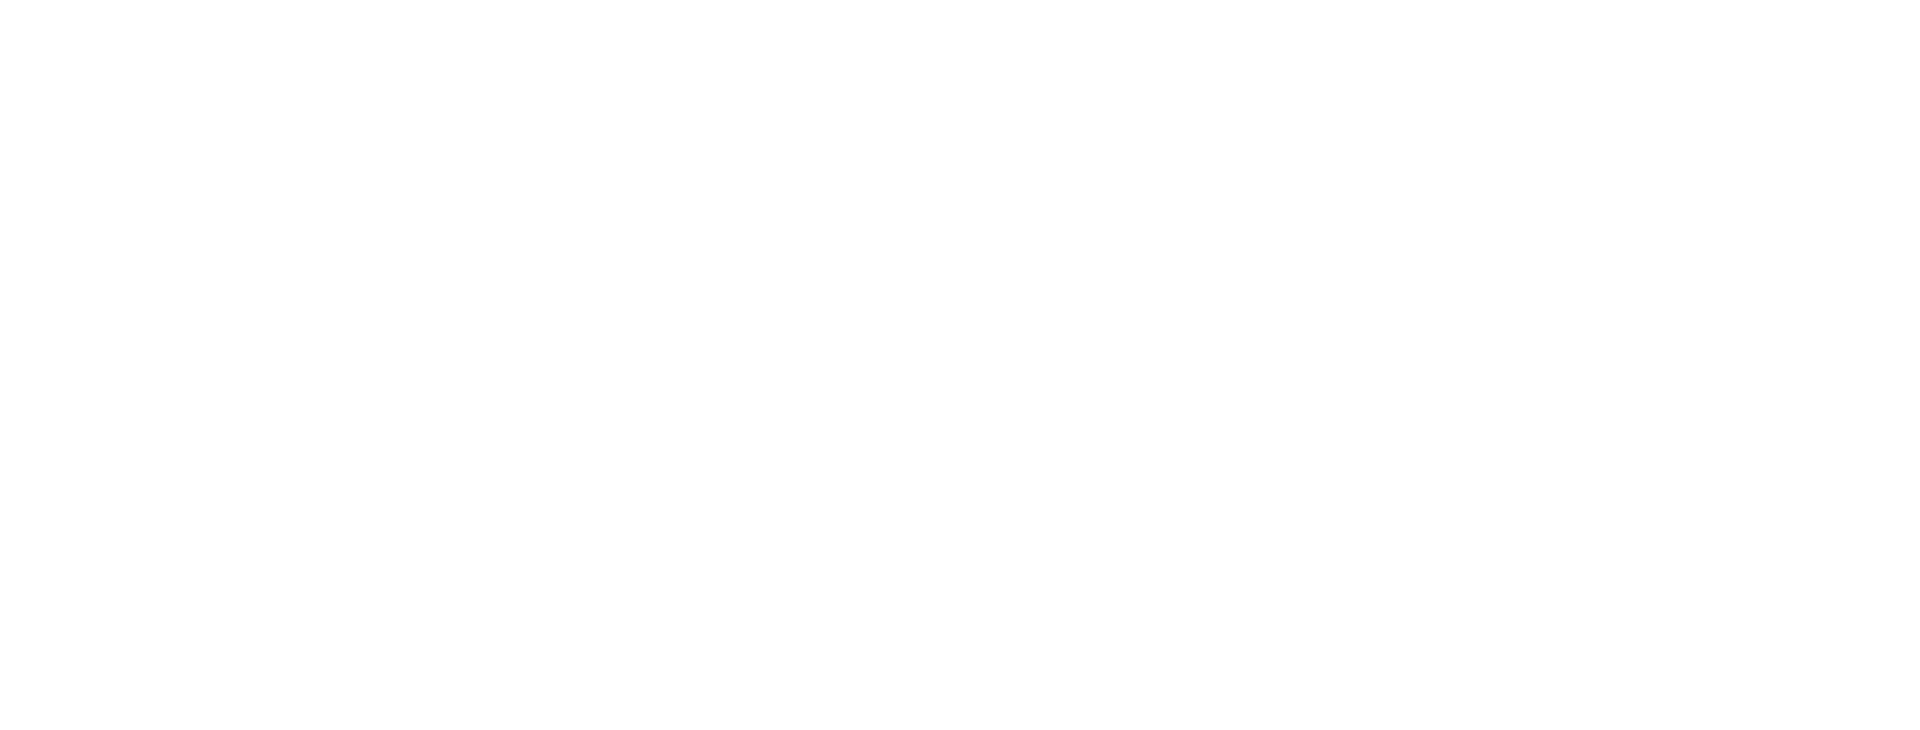 Listone Giordano - Atelier